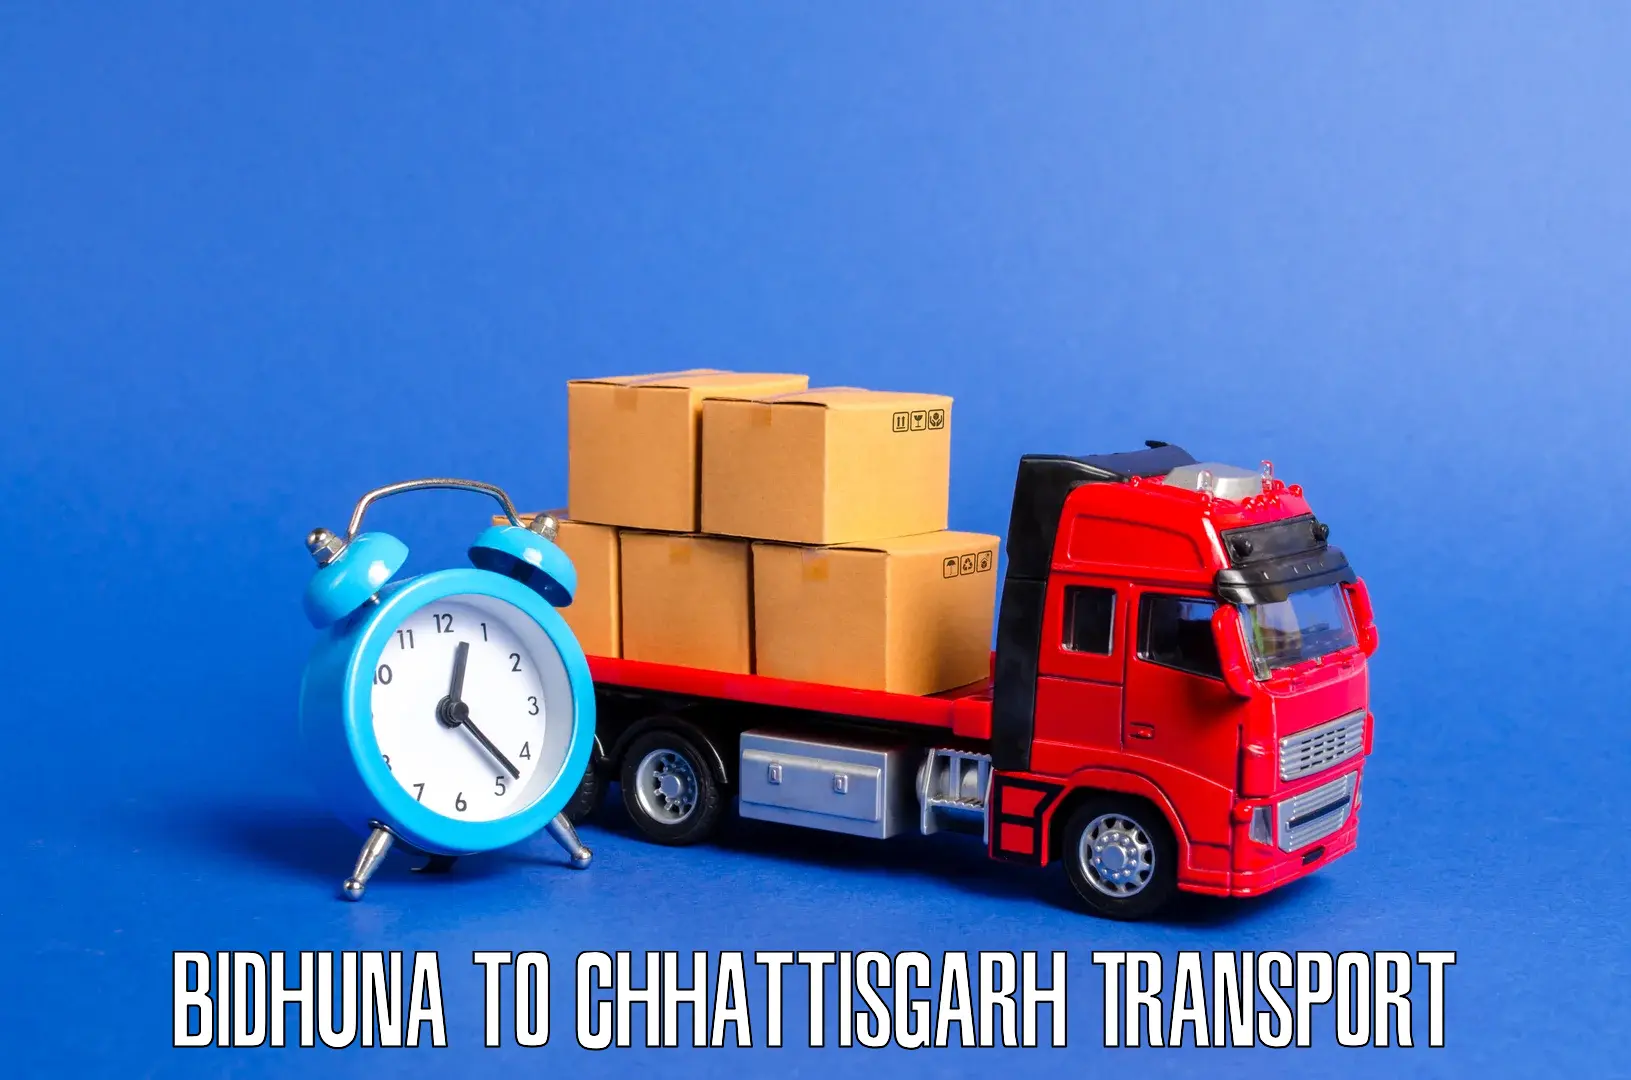 Truck transport companies in India Bidhuna to Berla